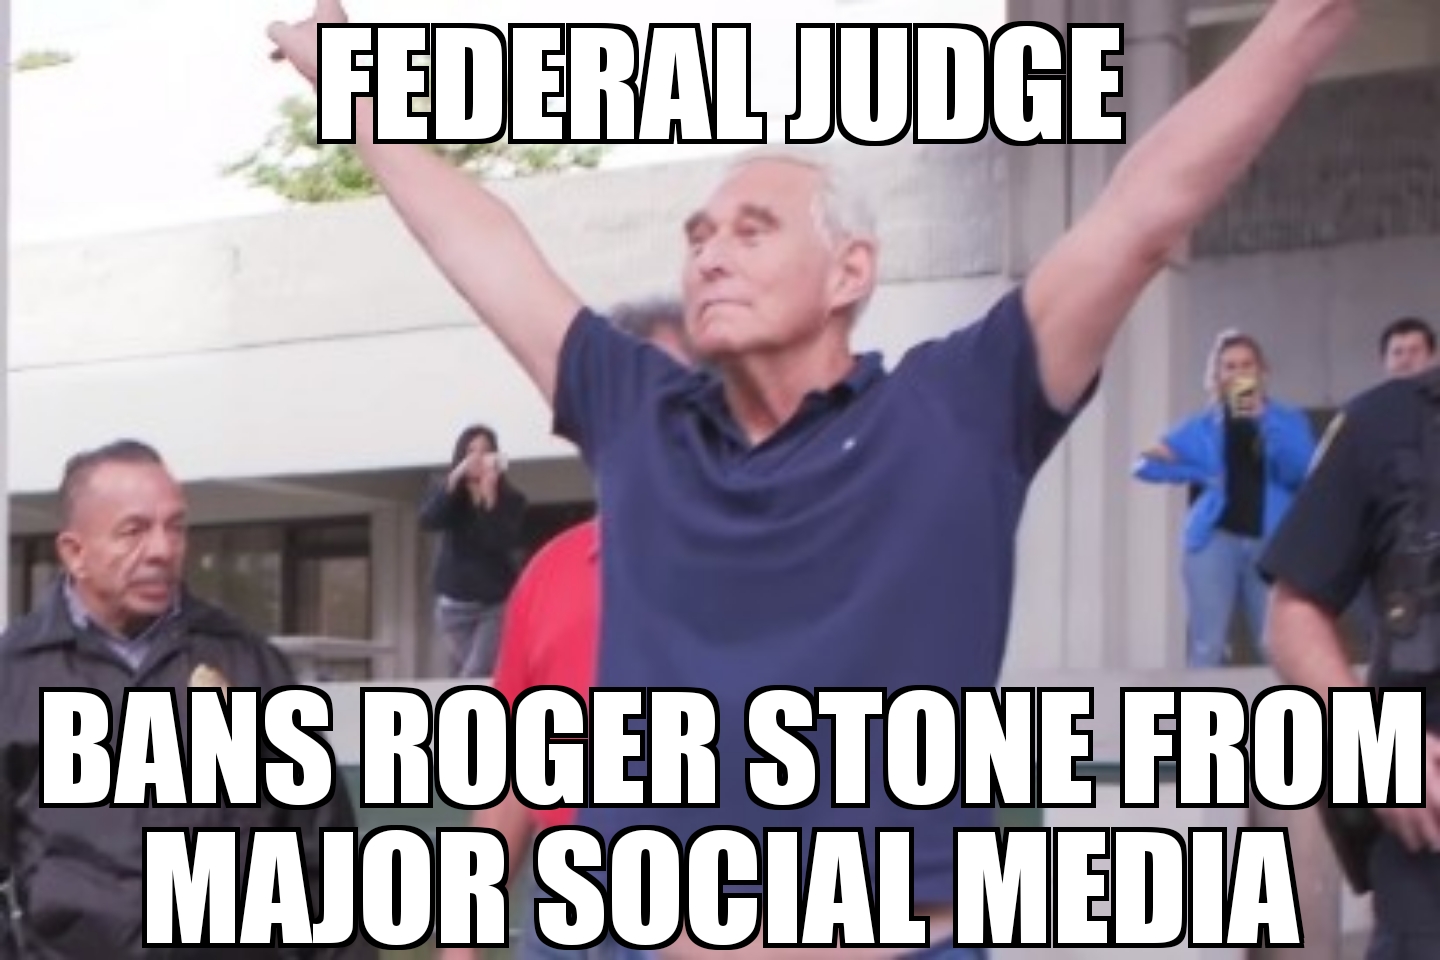 Judge bans Roger Stone from social media